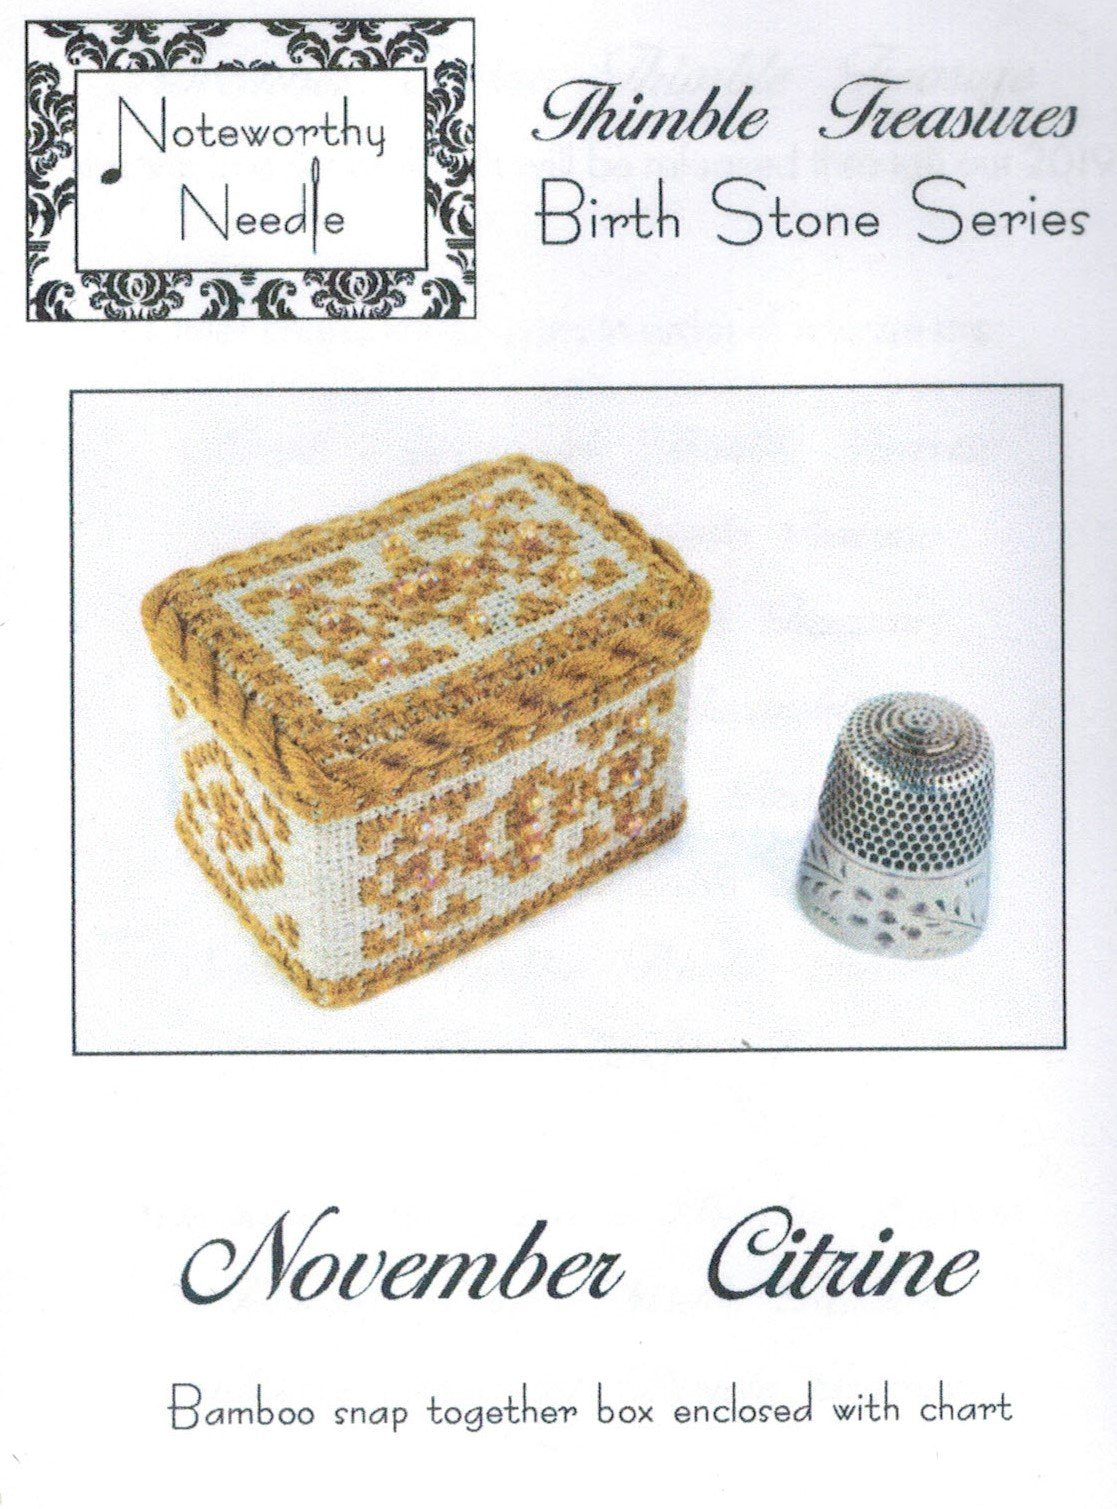 NWND - Thimble Treasures - Birth Stone Series: 11 - November Citrine